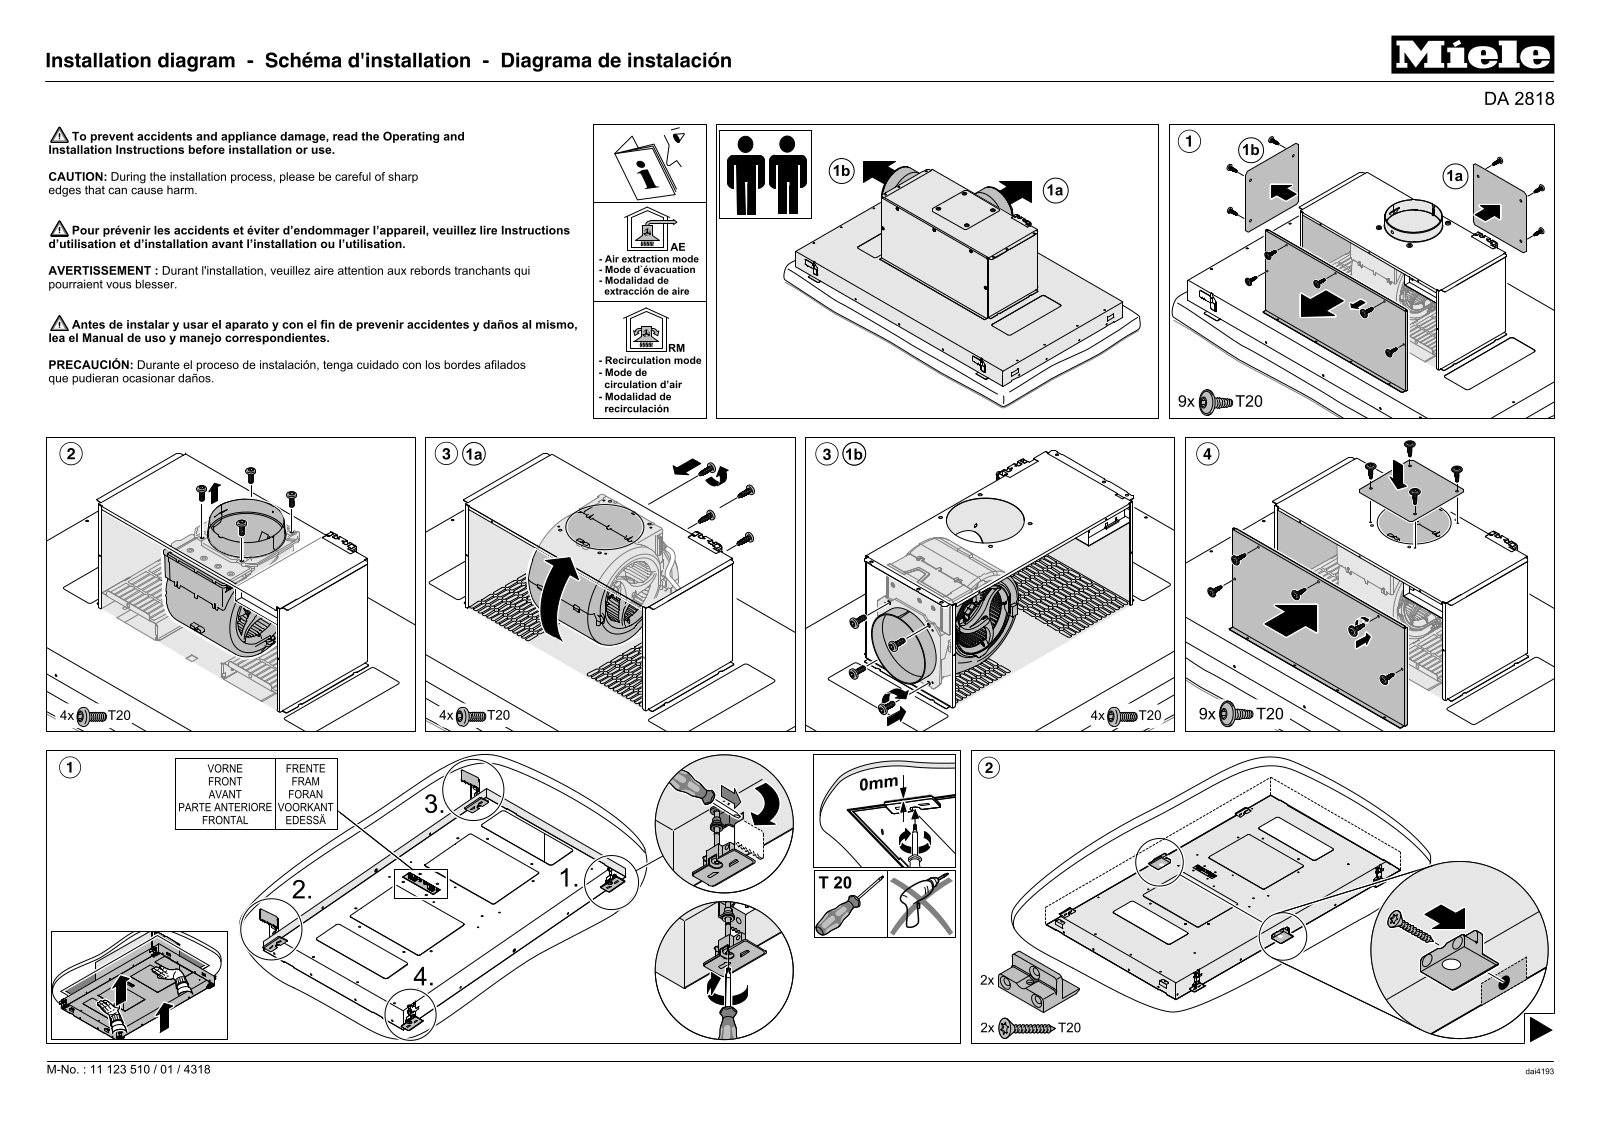 Miele DA2818 Installation manual